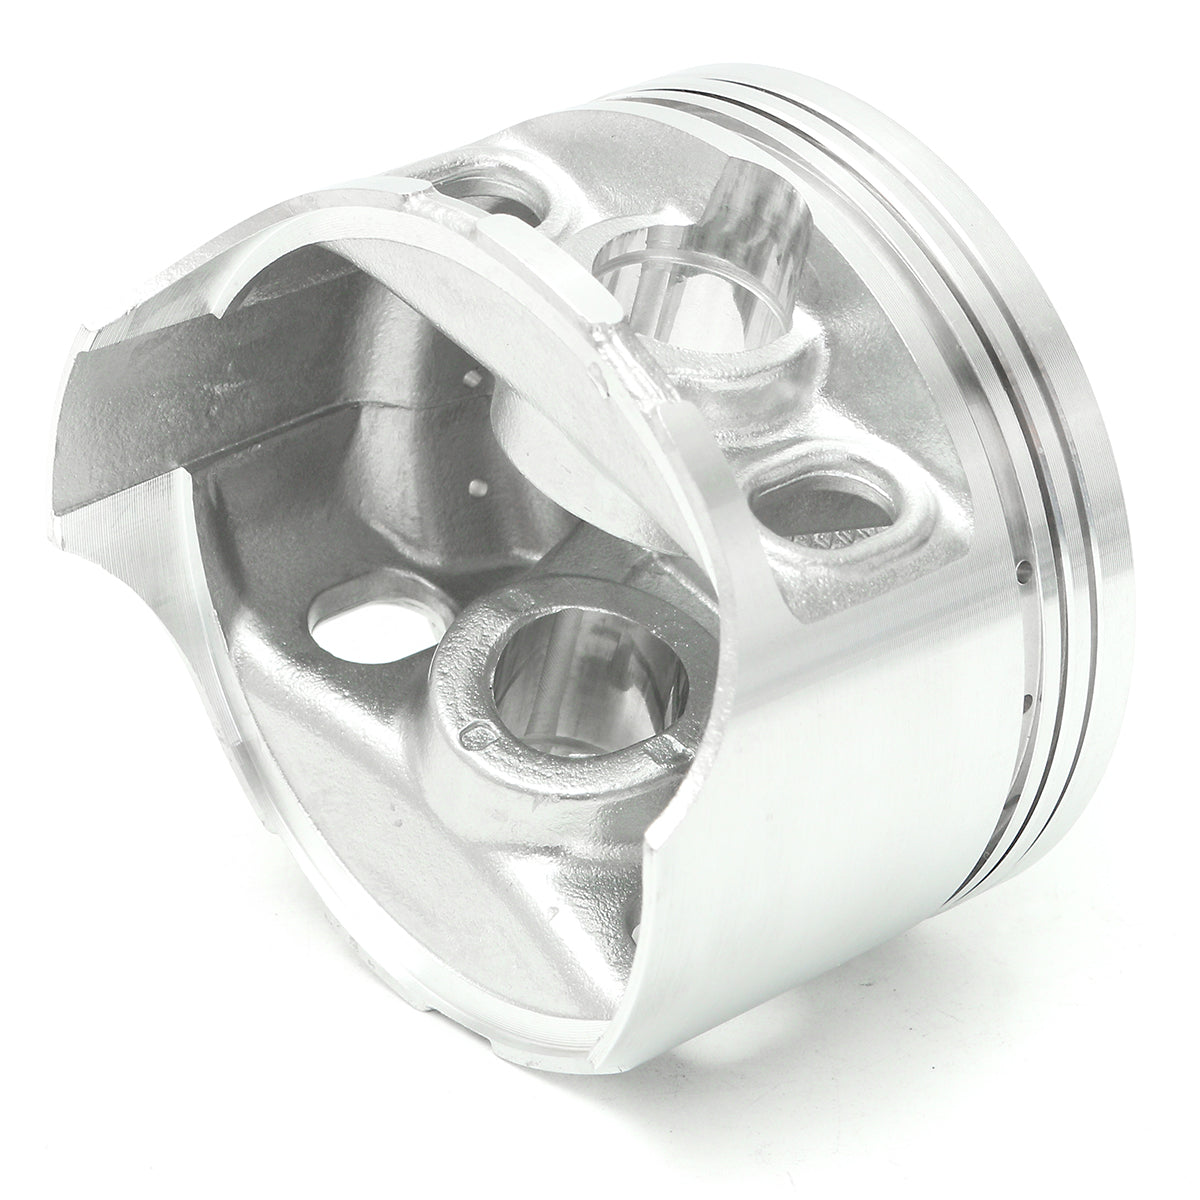 Dim Gray Cylinder Piston Spark Plug Filter Gasket Rings For Honda Rancher TRX350 TRX 350